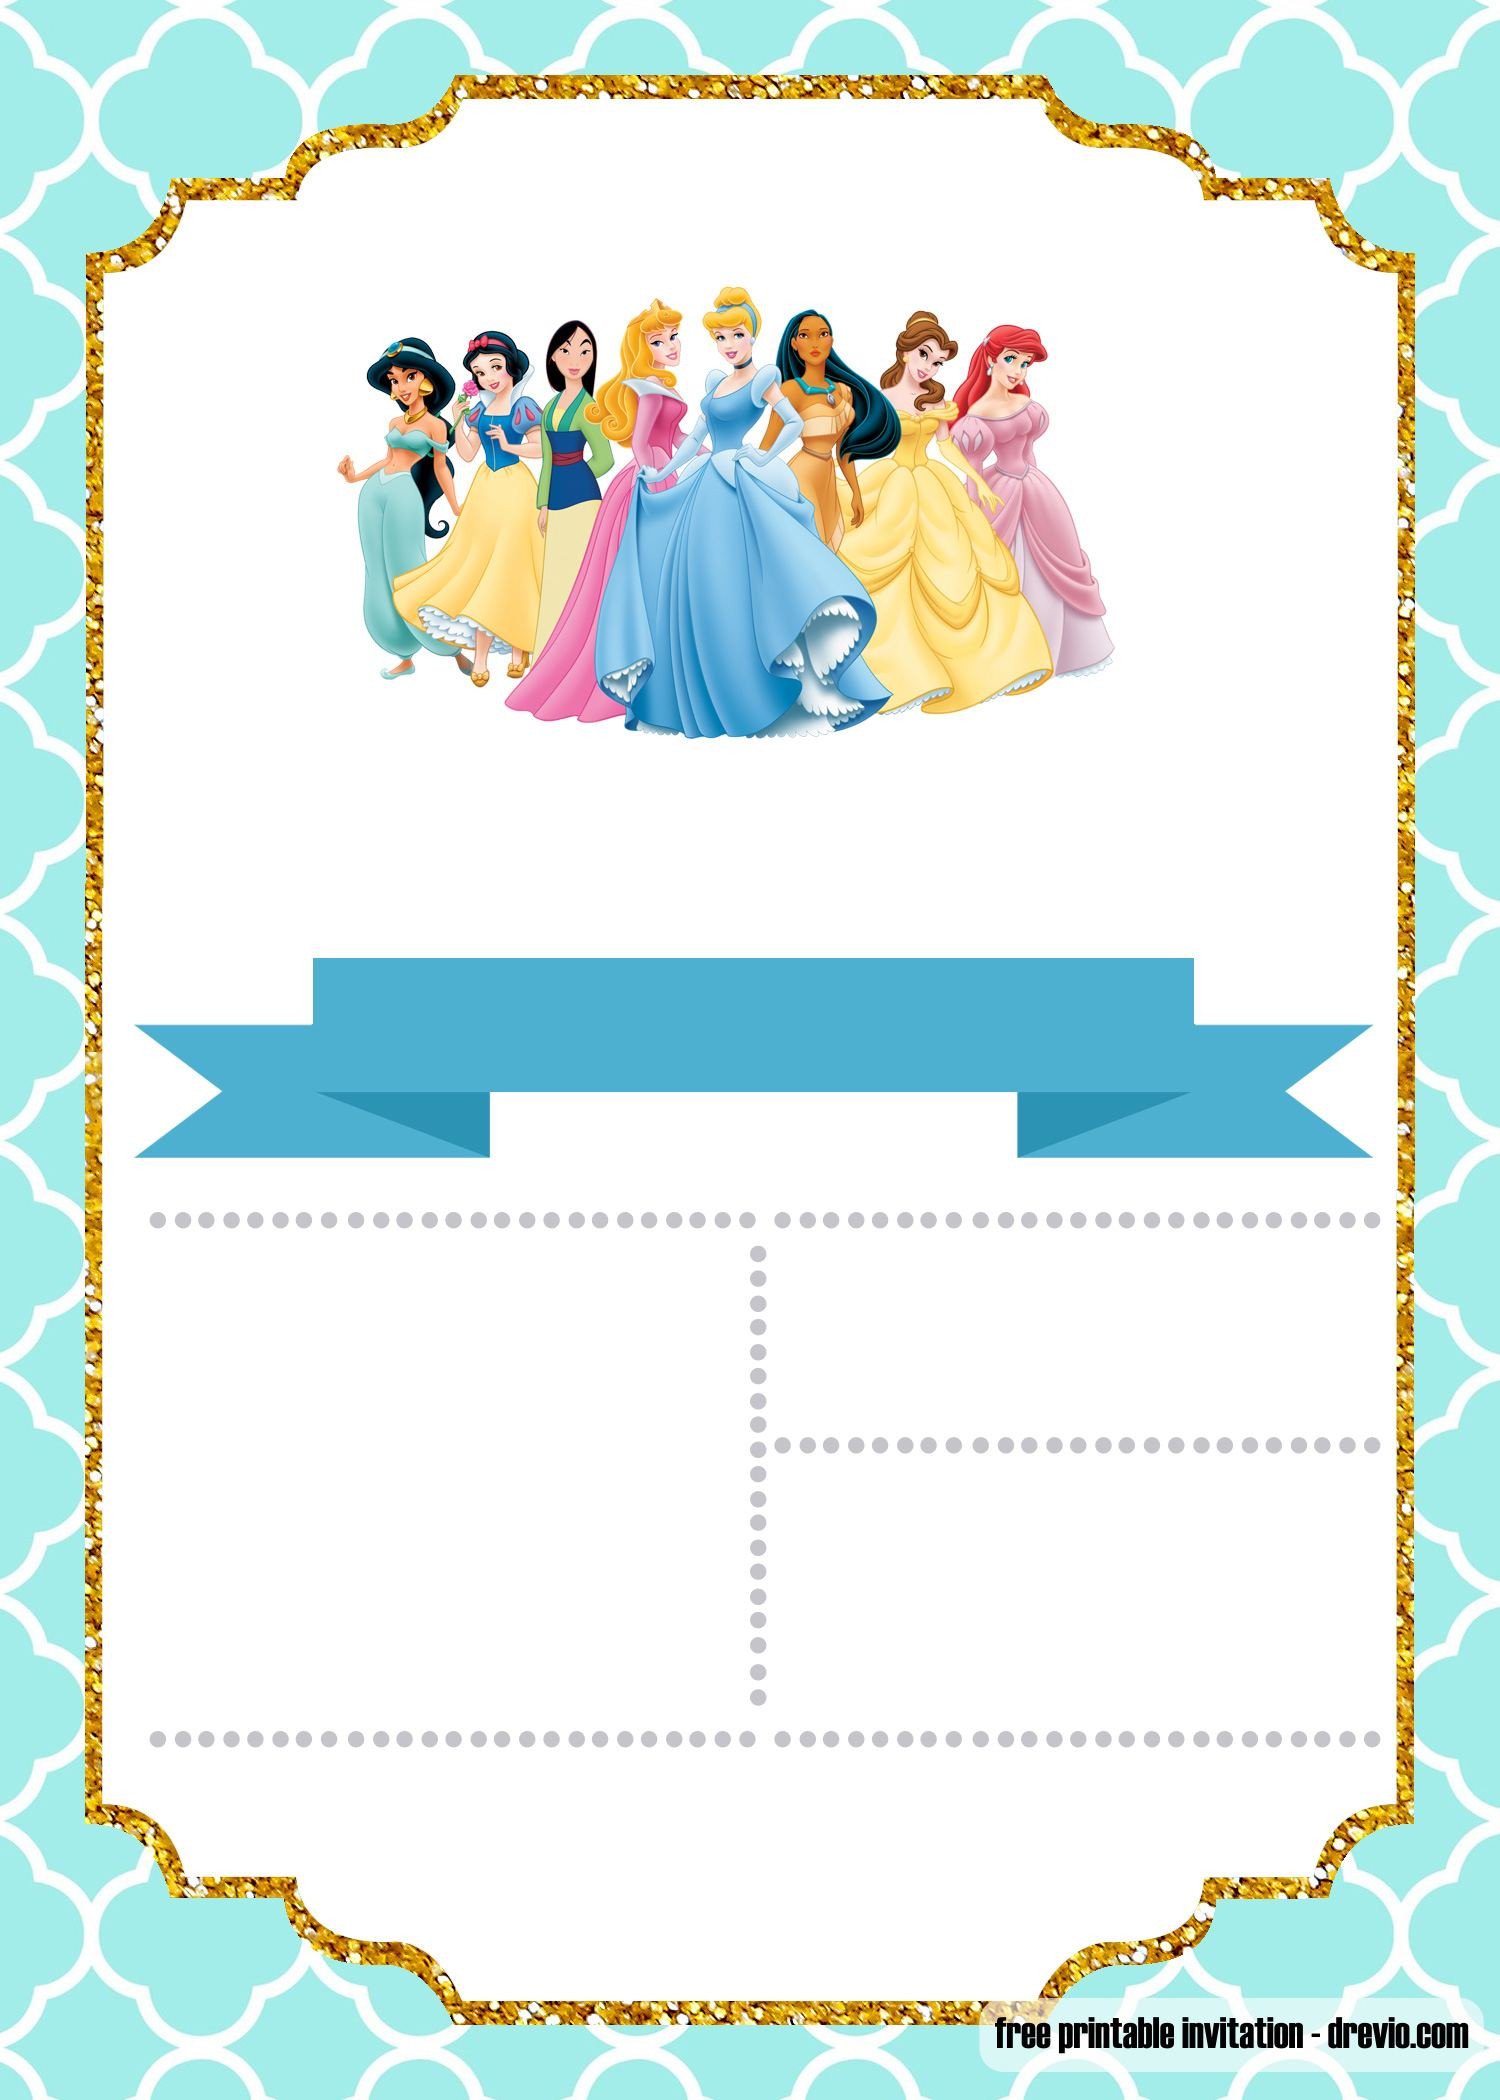 Disney Princess Invitation Template Free Disney Princess Invitation Template for Your Little